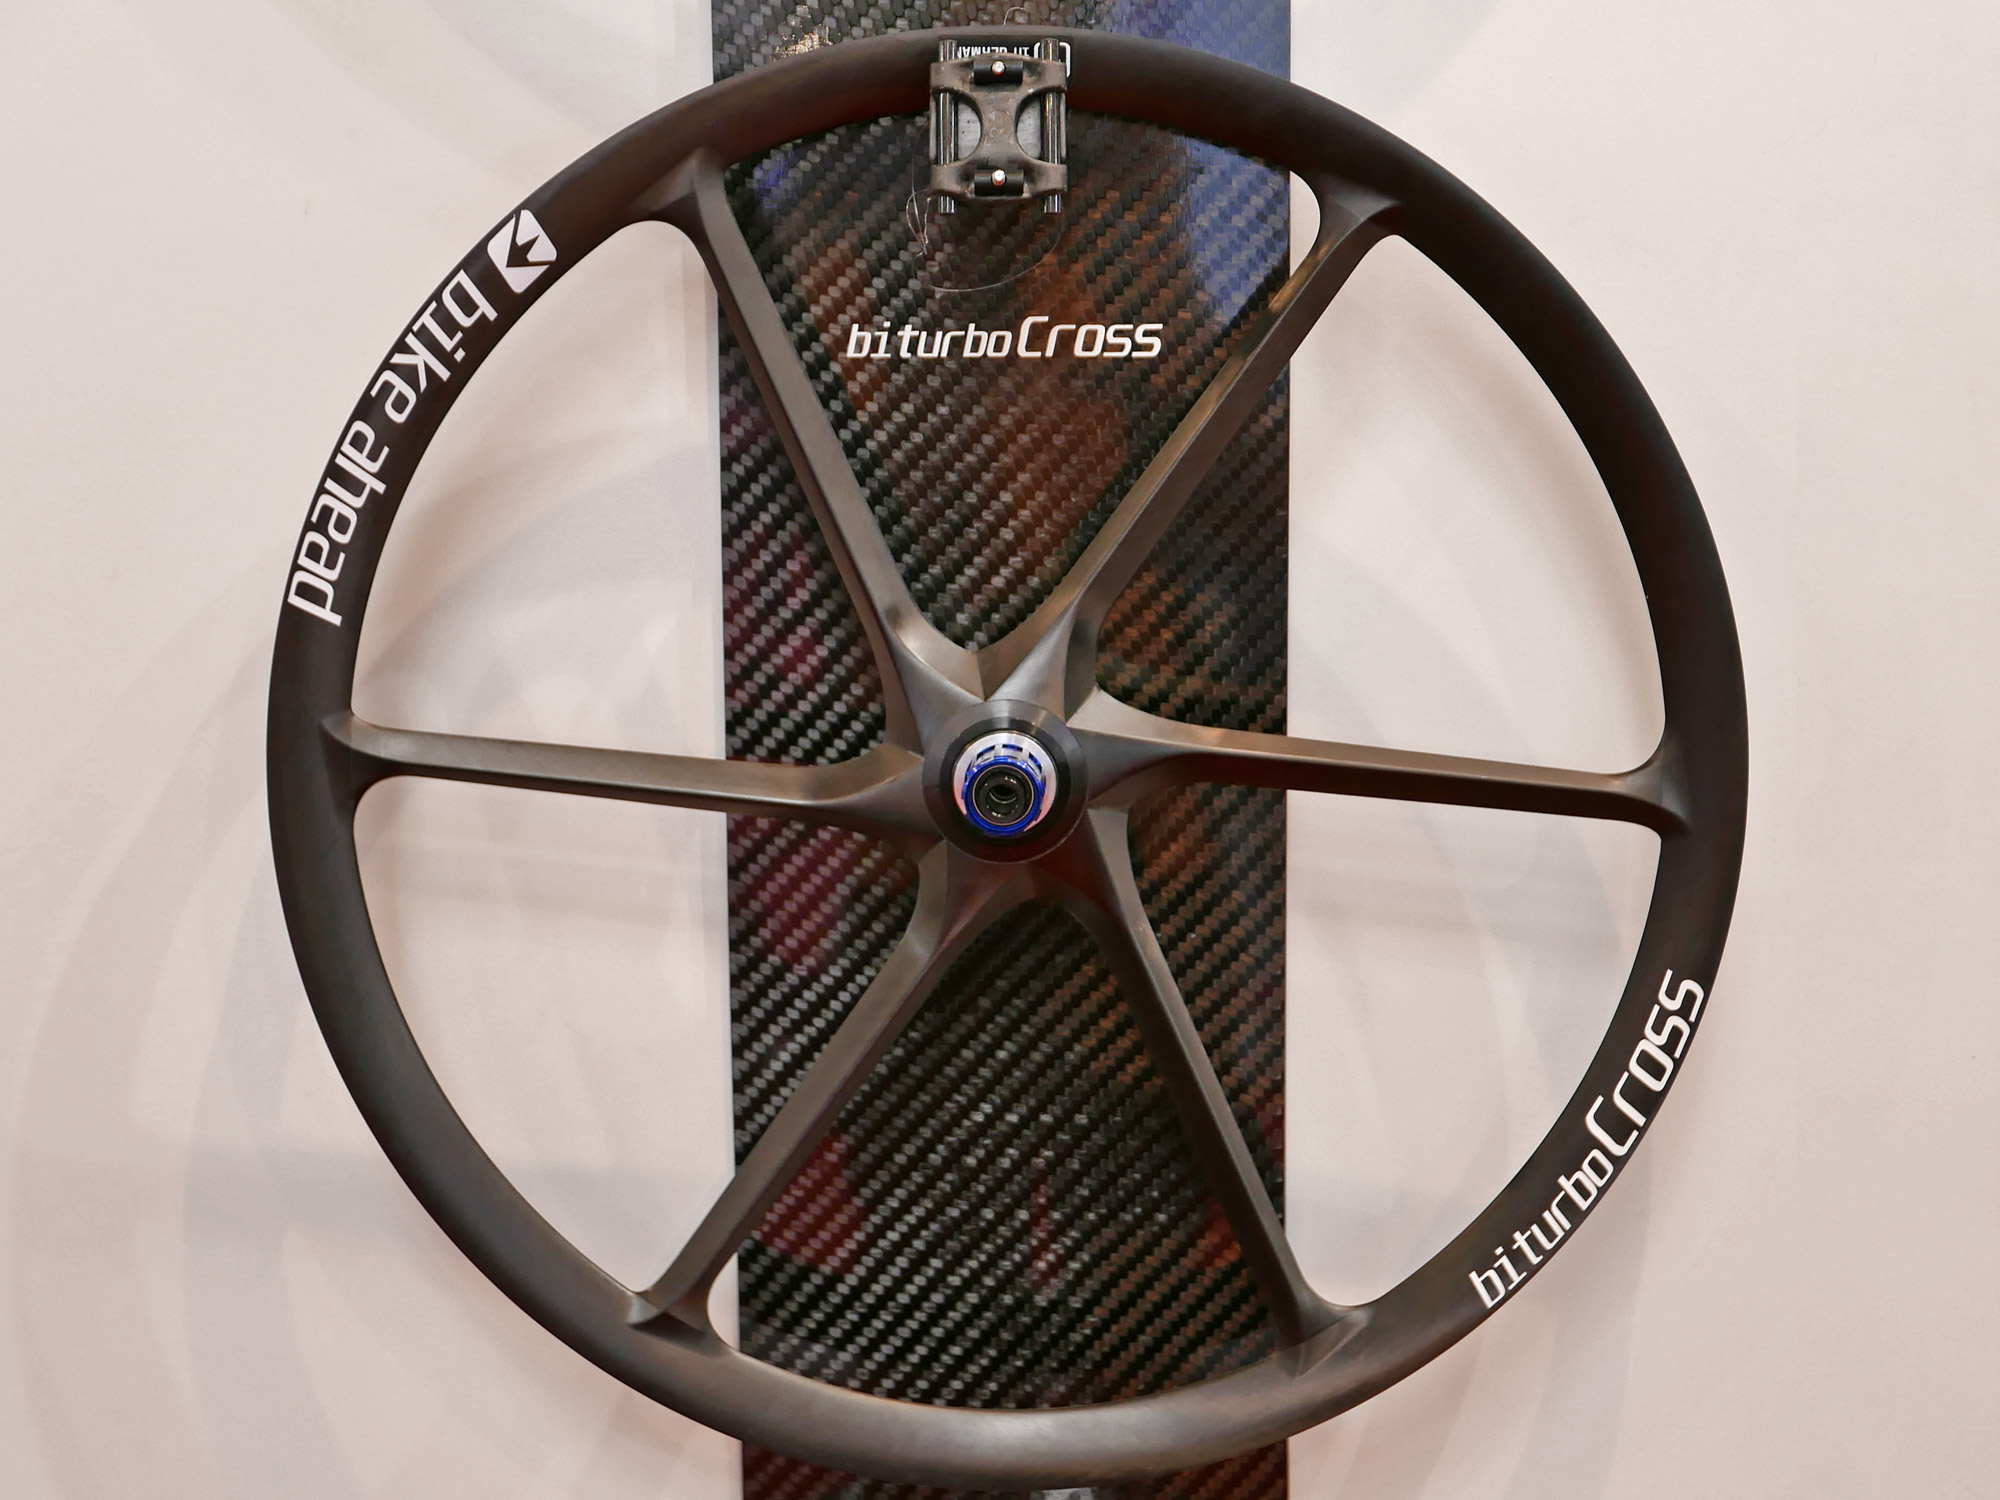 EB16: Bike Ahead debuts light 27.5+ 40mm TheRim, BiturboCross wheels & wins award for NSA